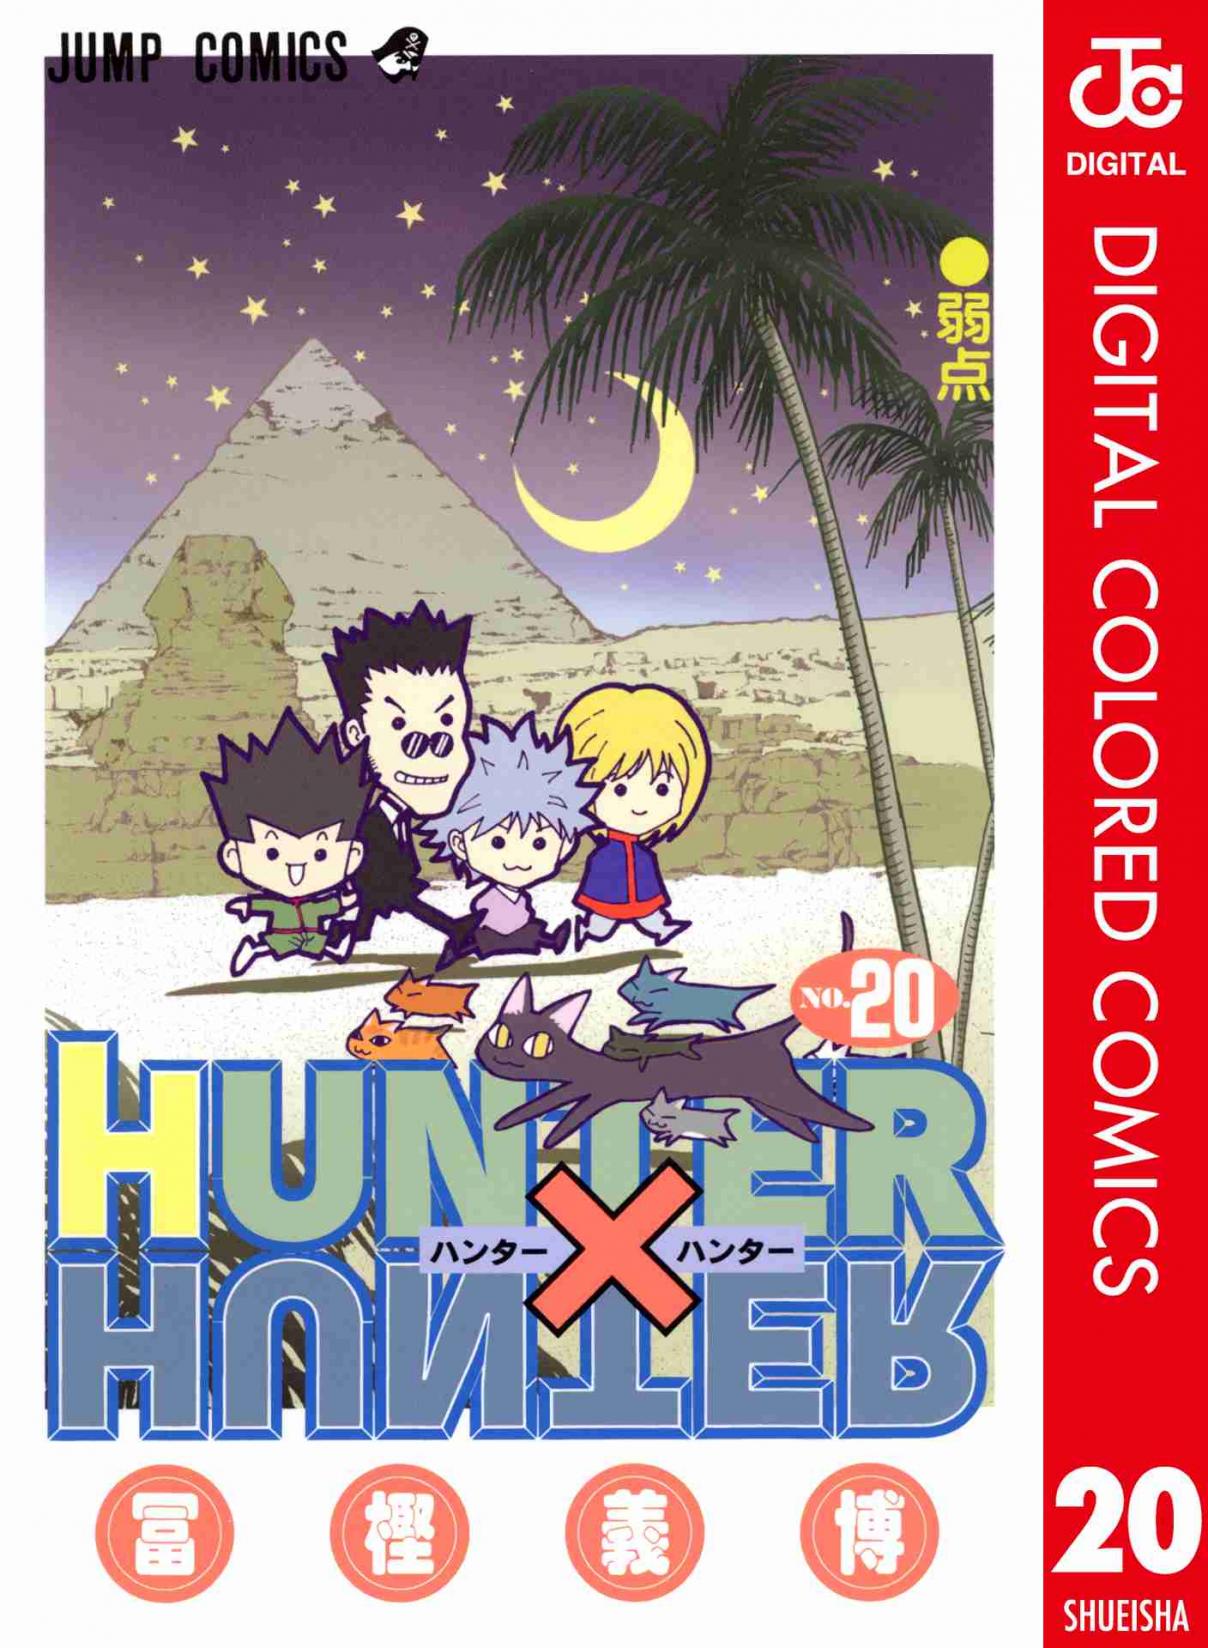 HUNTER x HUNTER - DIGITAL COLORED COMICS 200